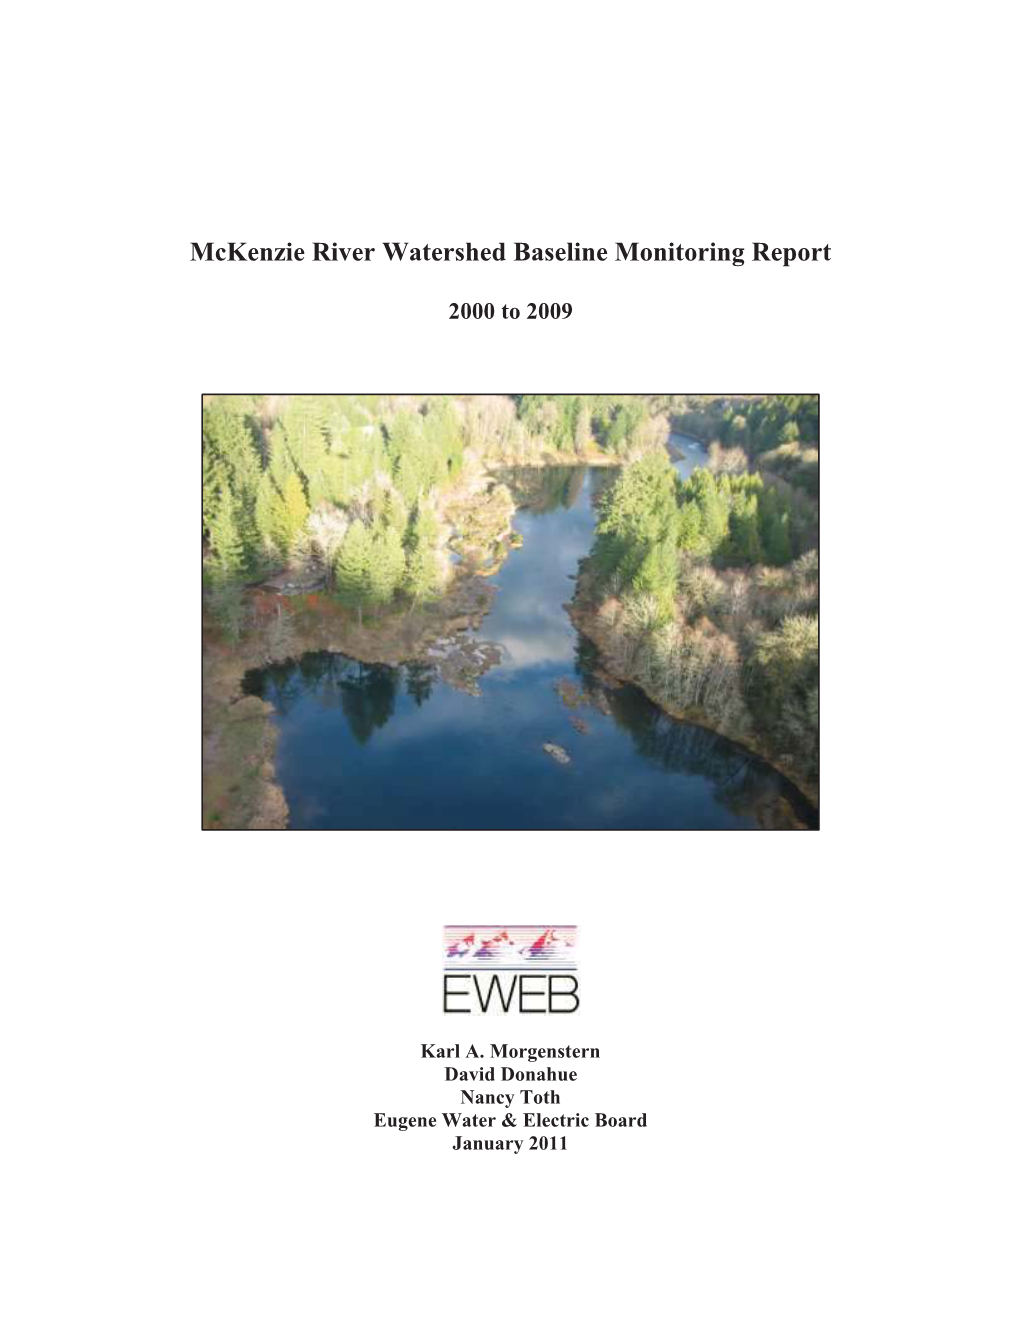 Lower Mckenzie River Watershed